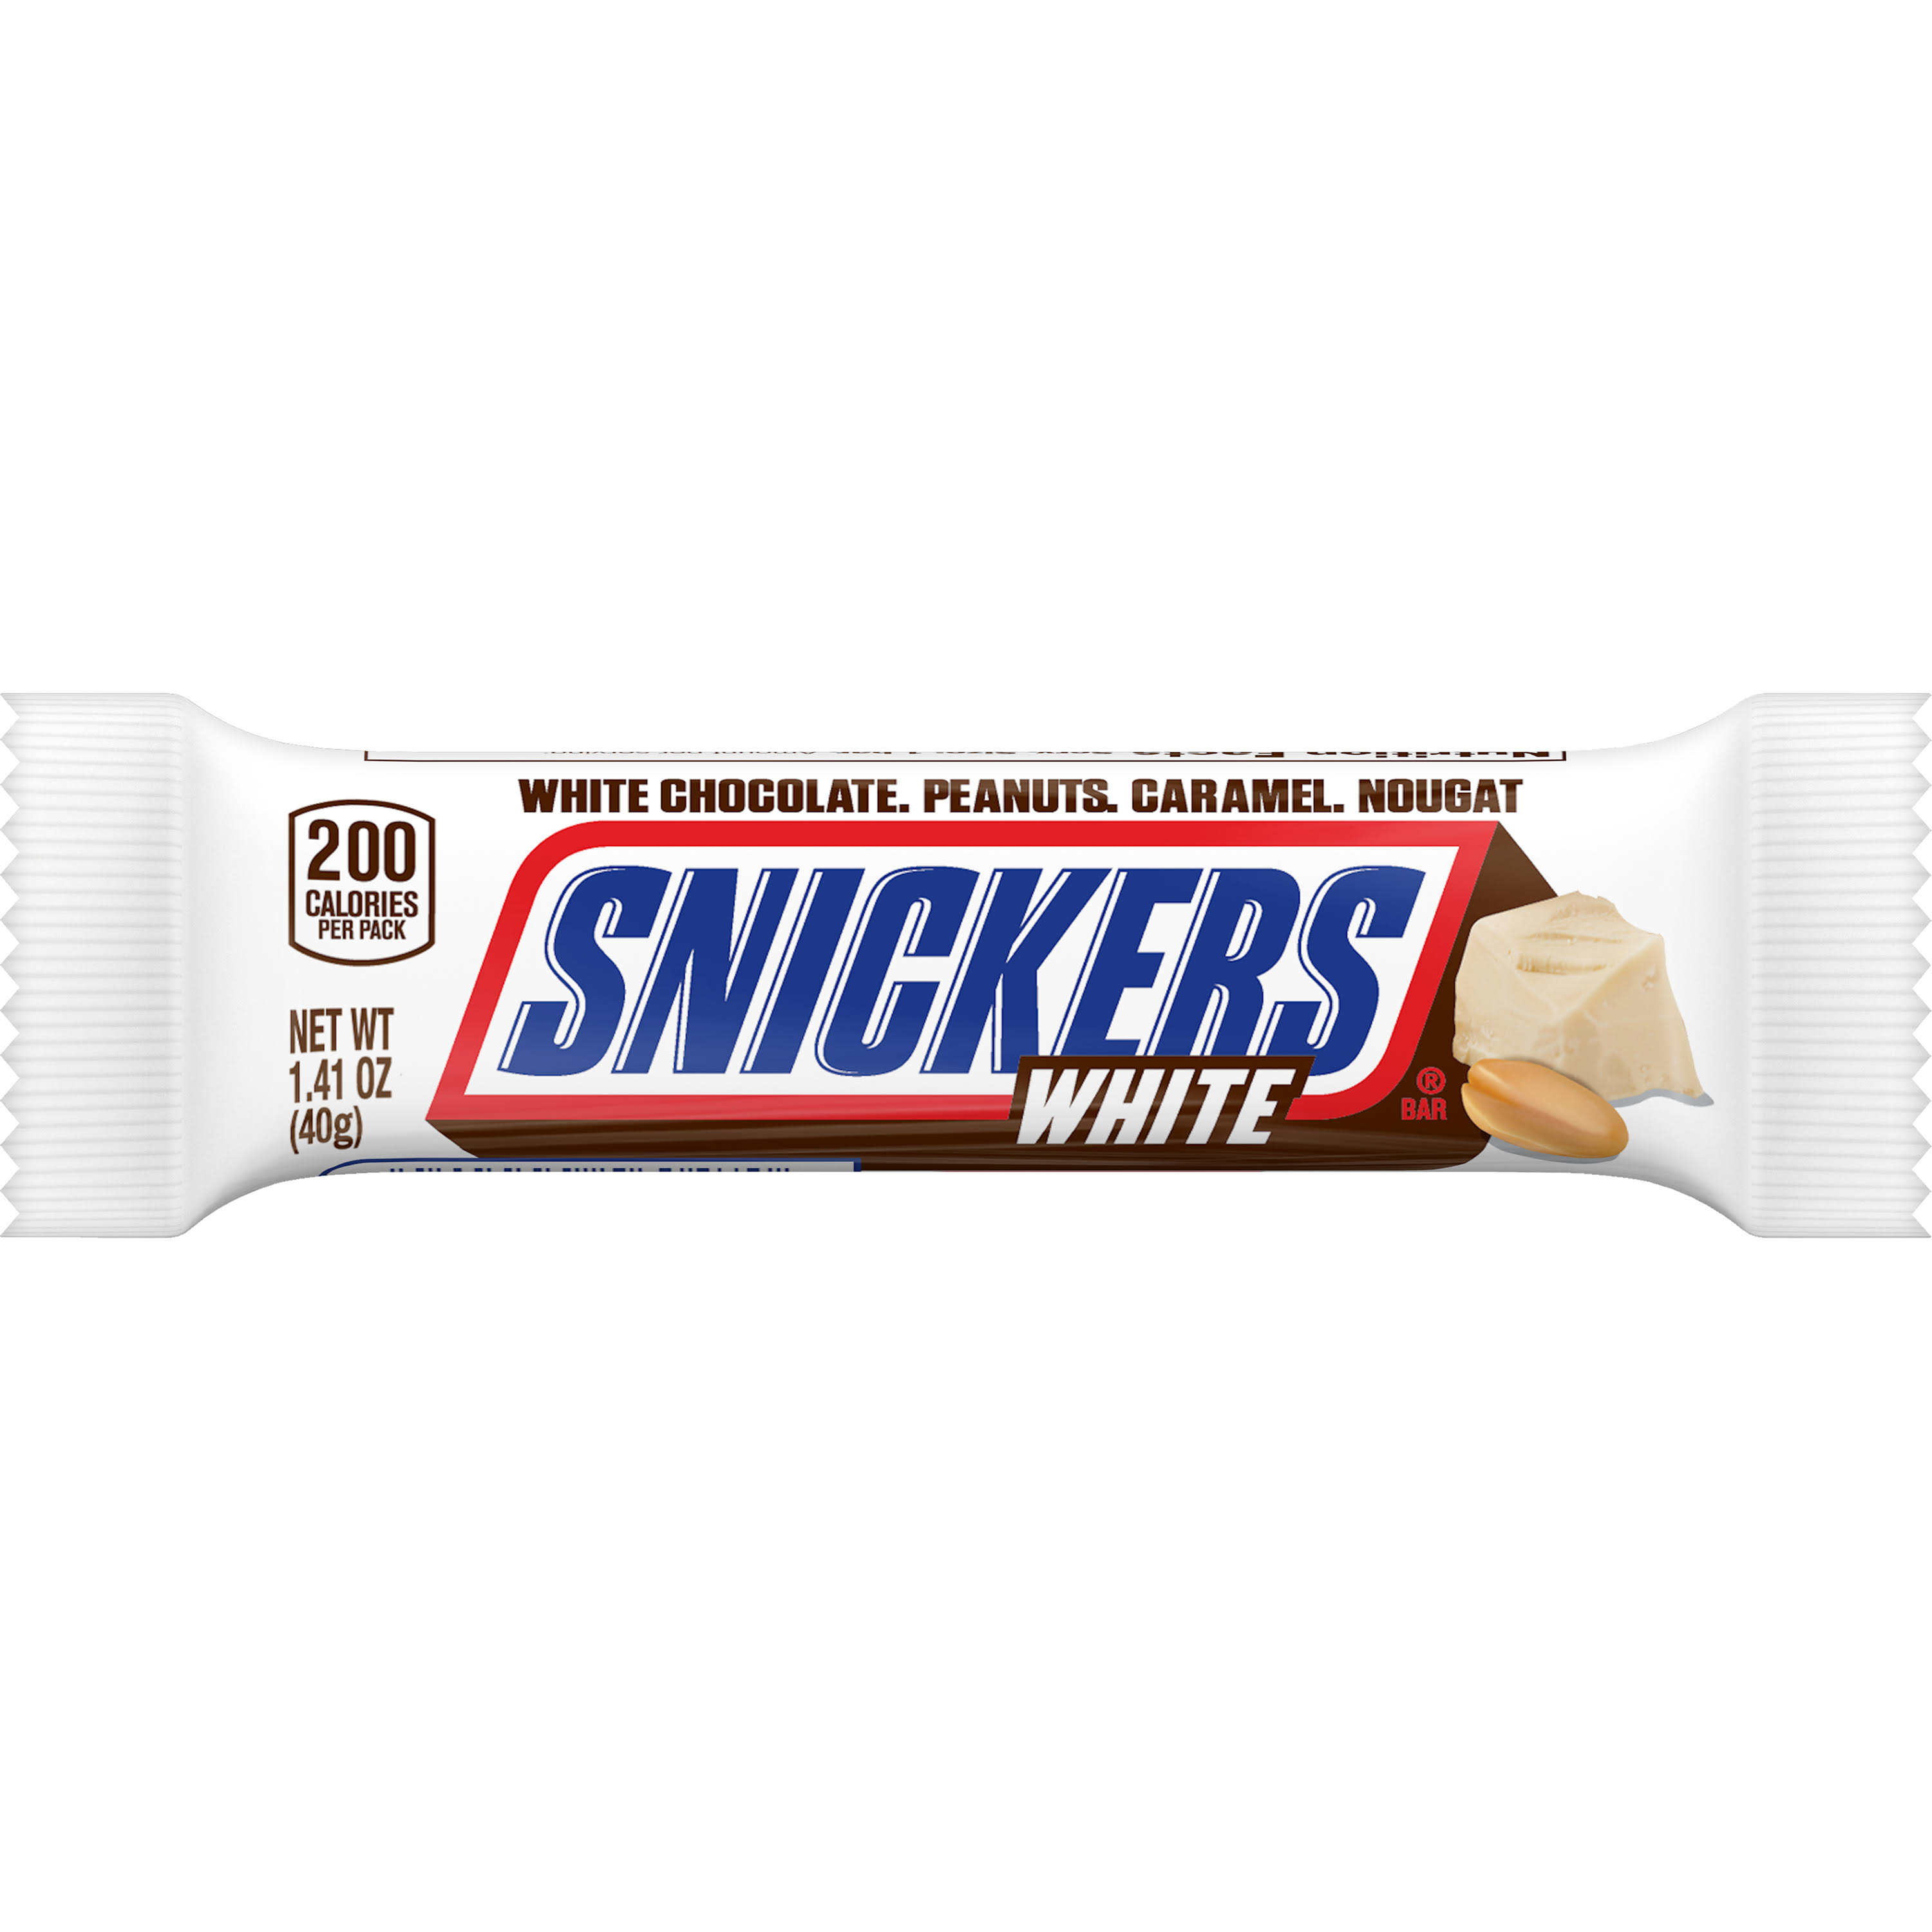 Snickers White - 1.41oz